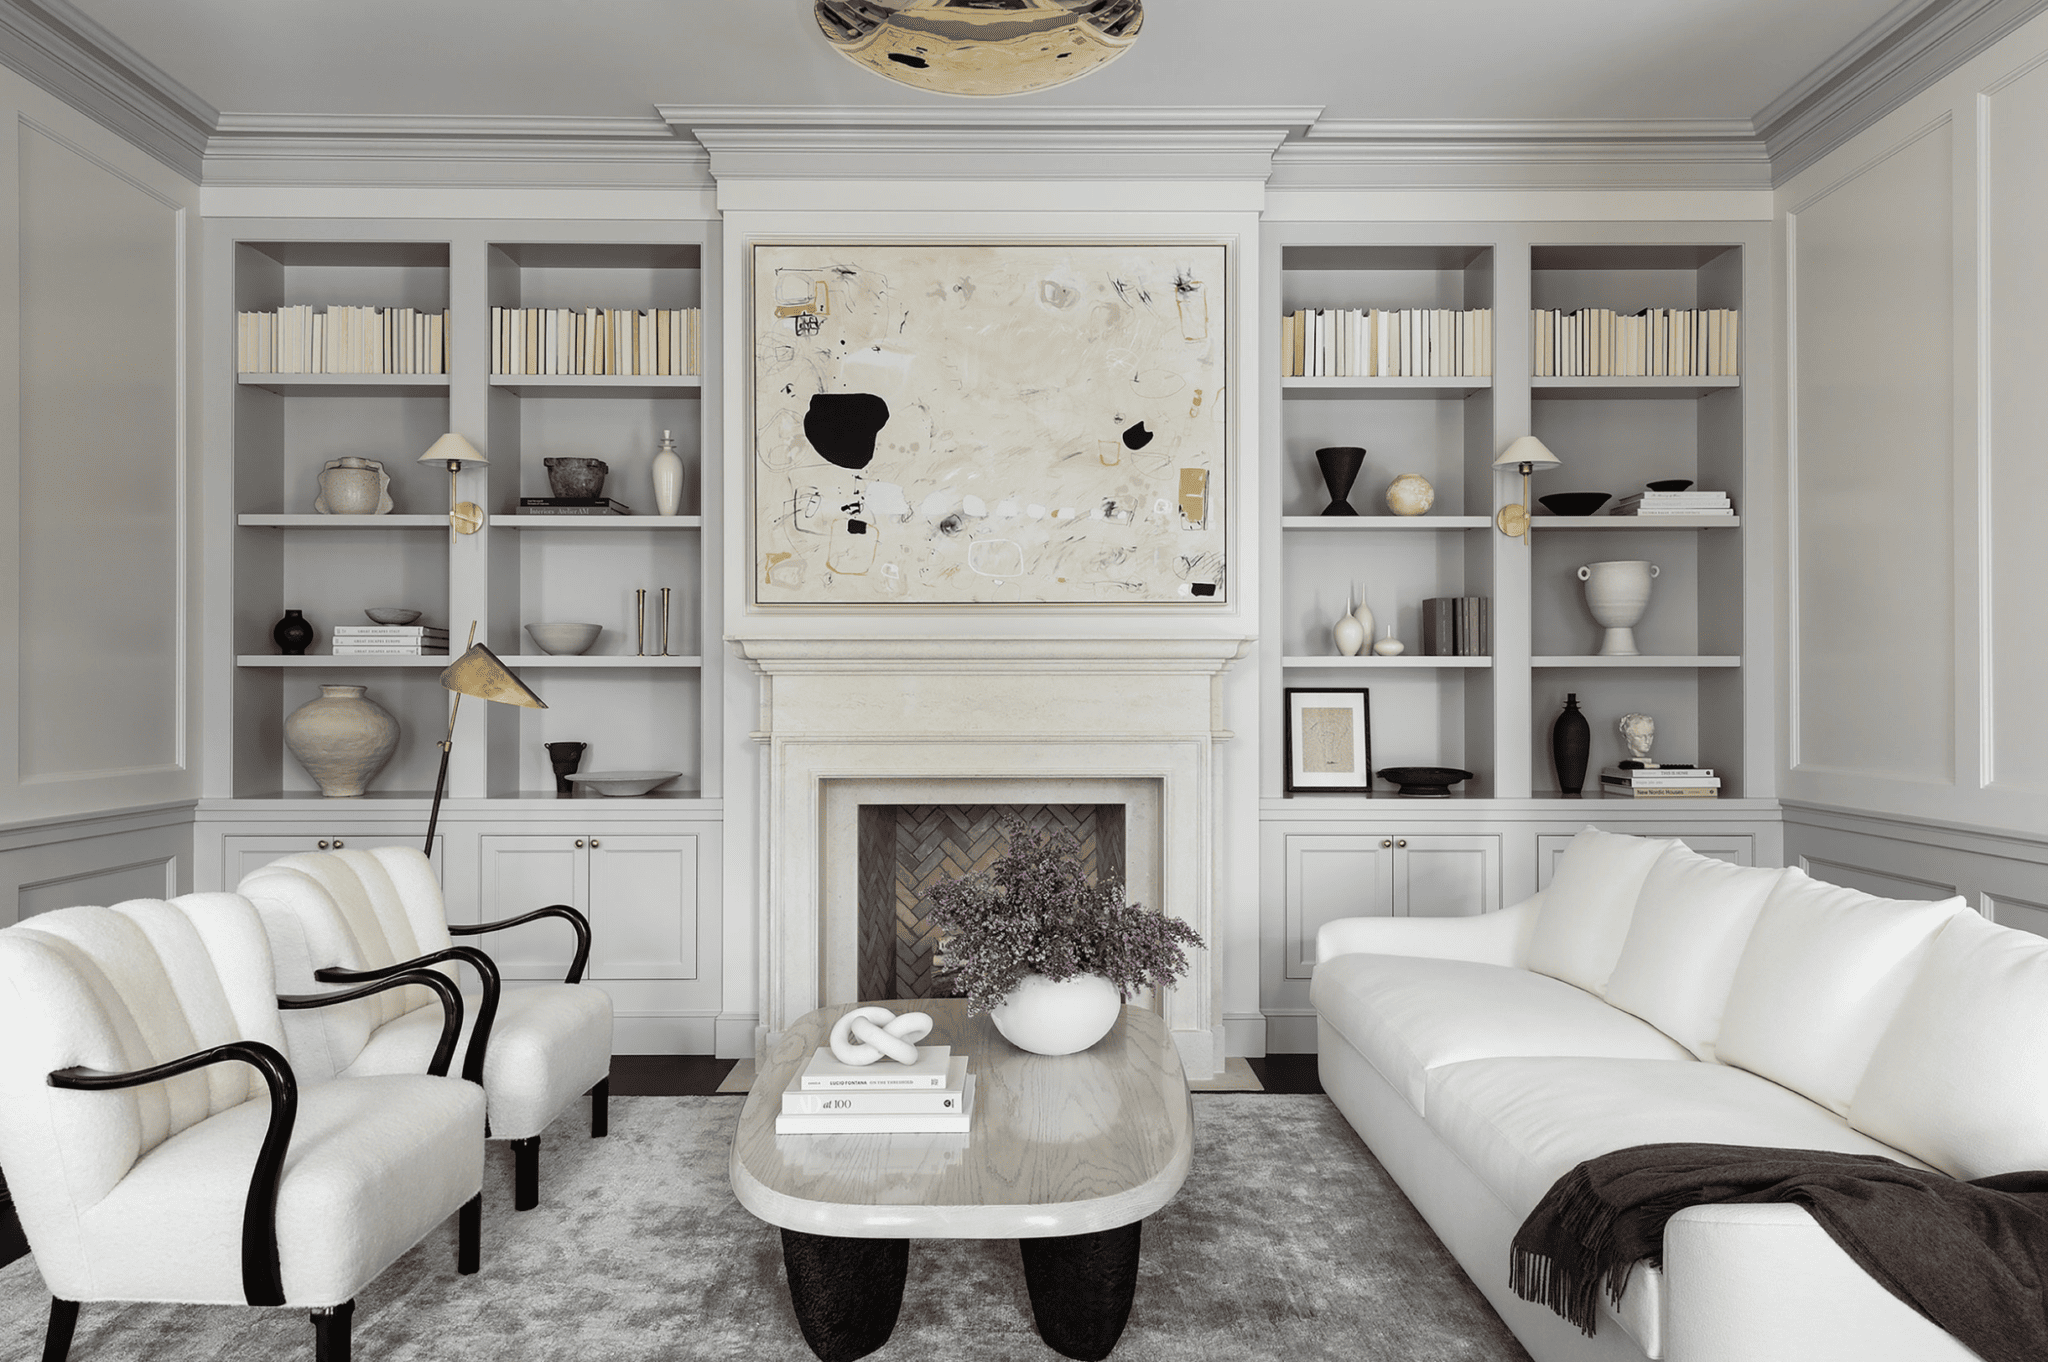 Quiet luxury living room example in home decor